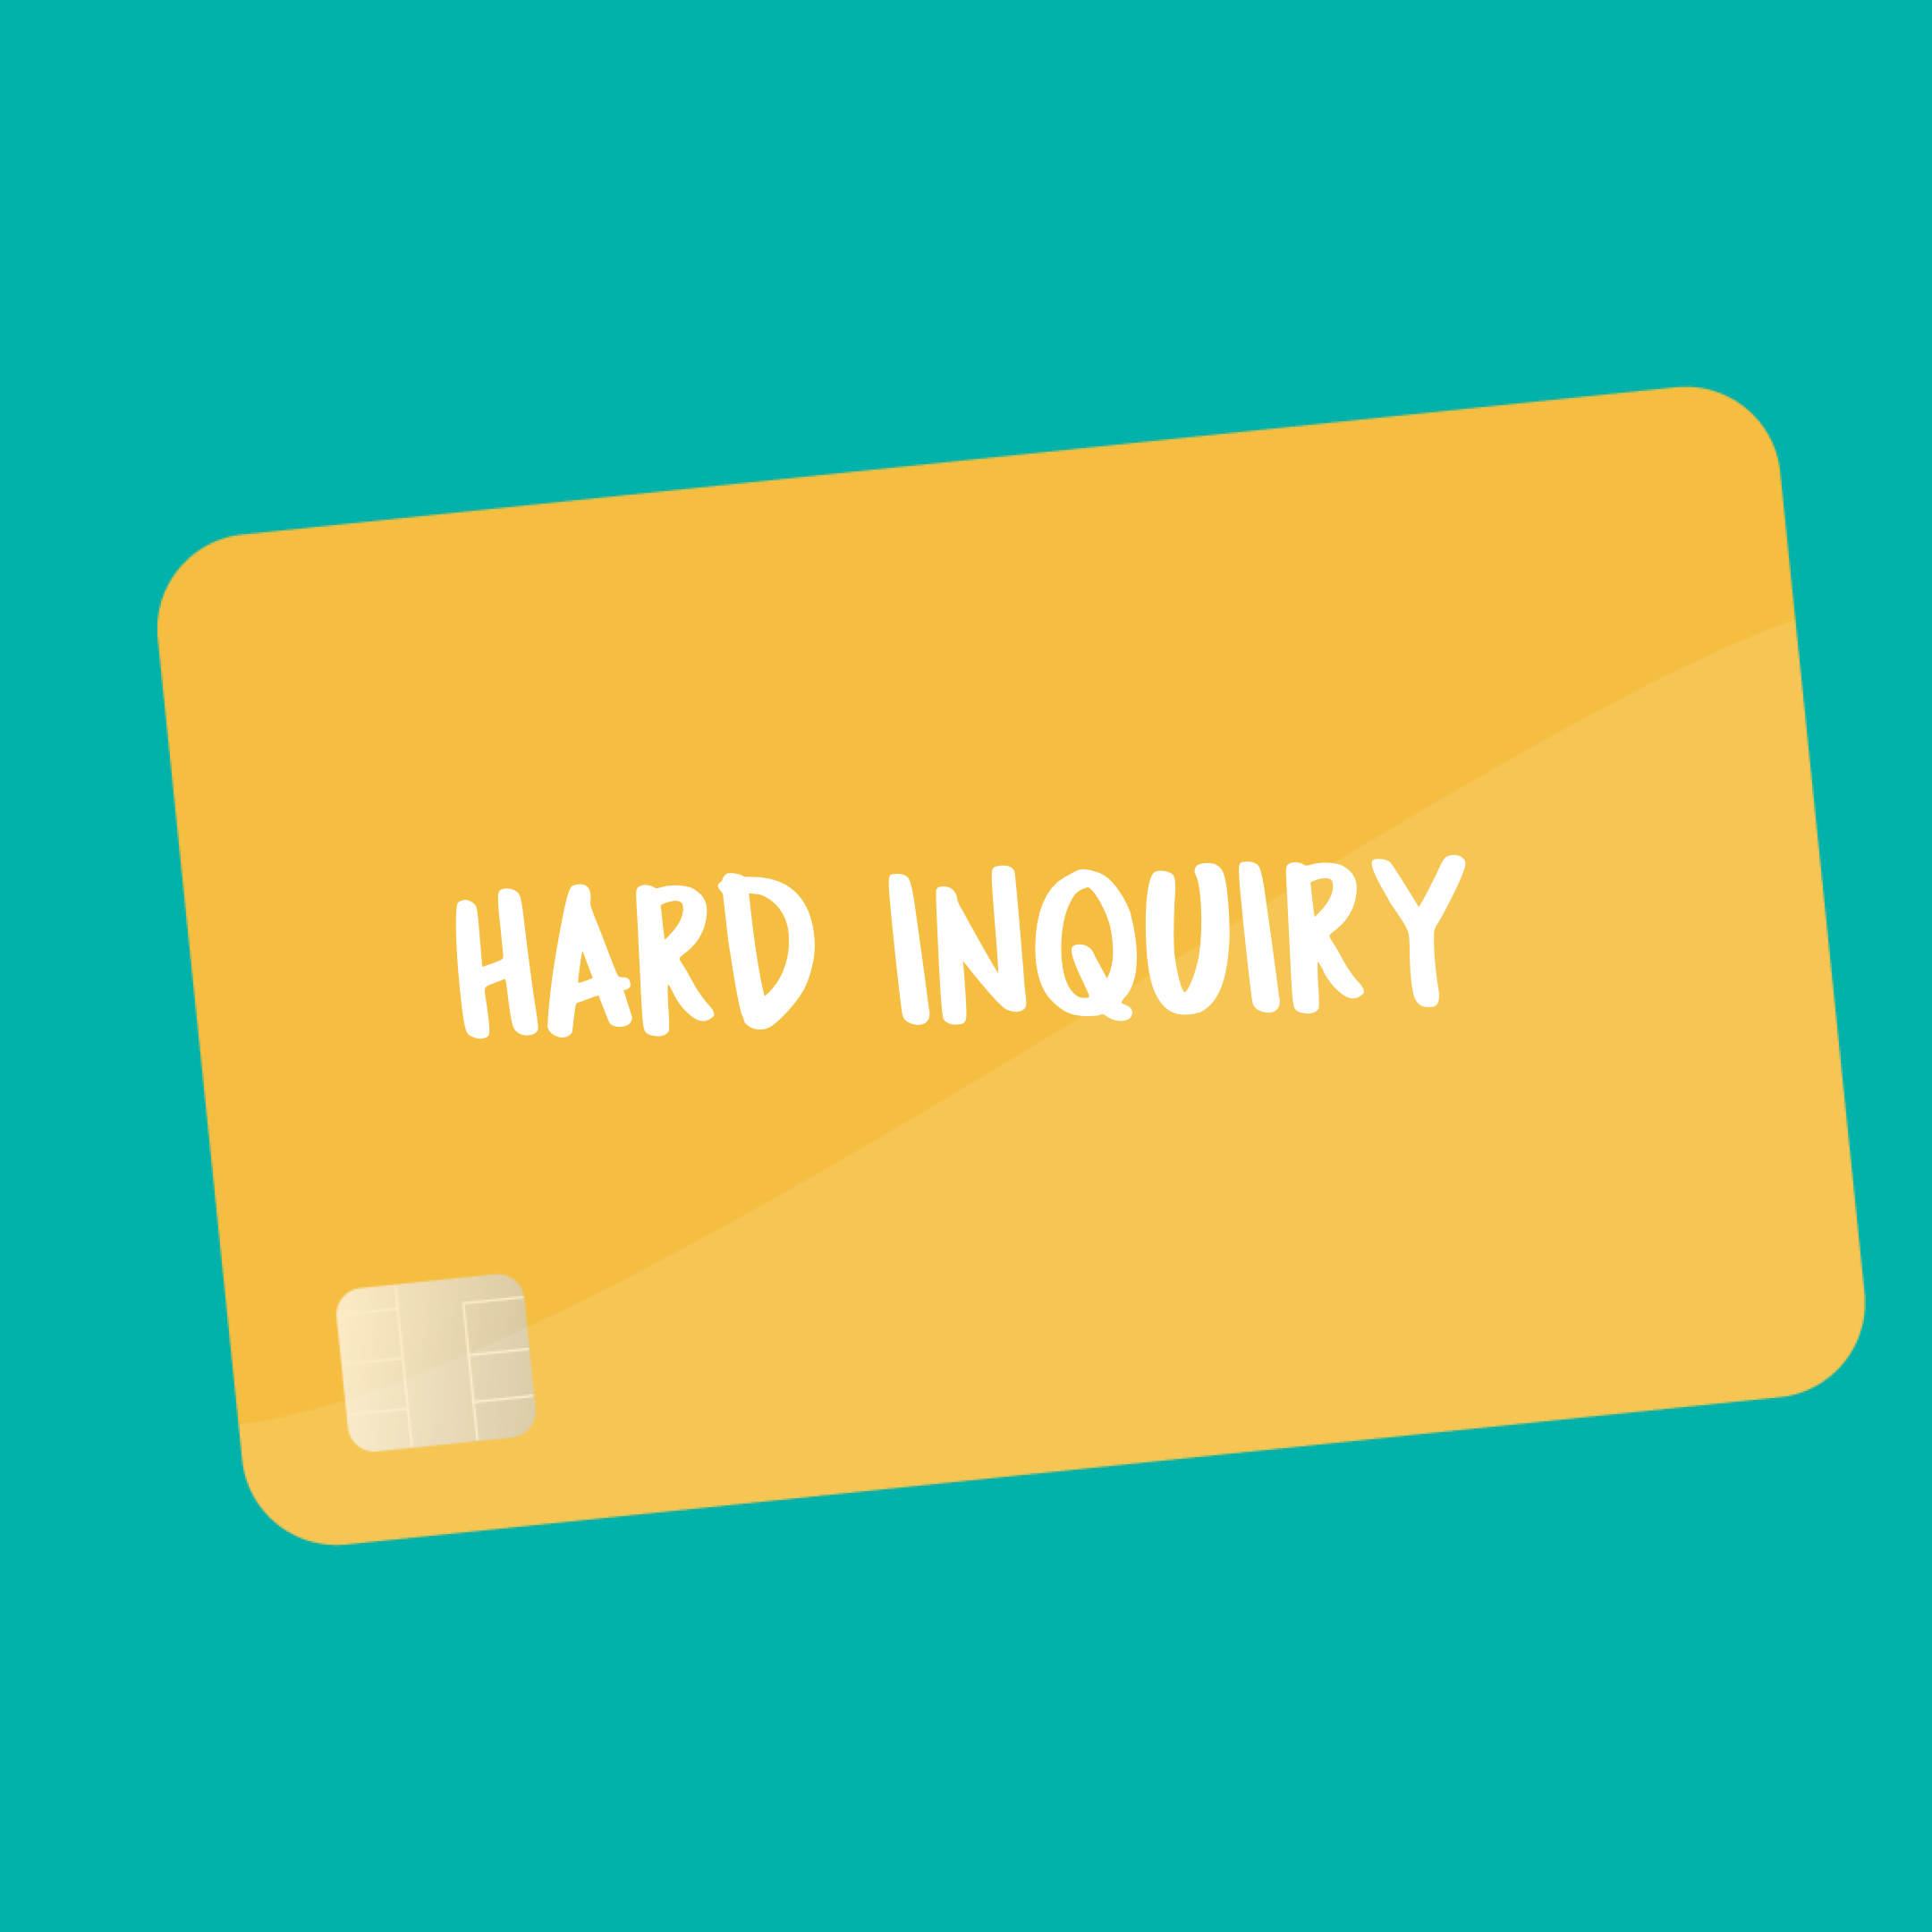 hard inquiry flashcard